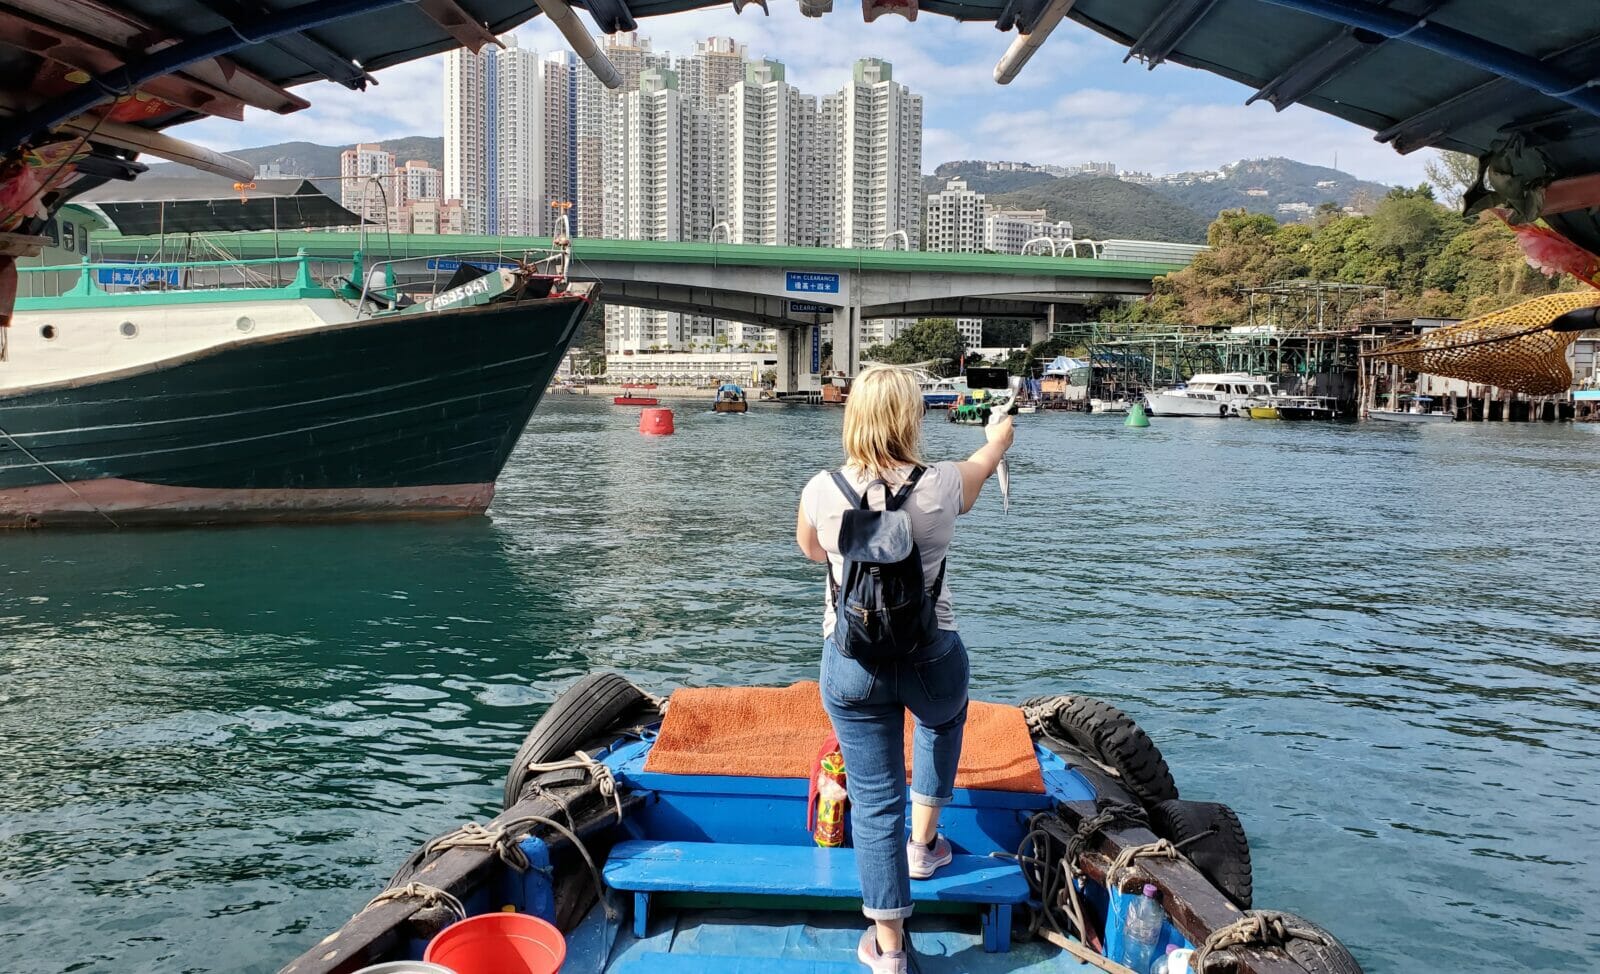 Take a Virtual Tour of Hong Kong with Us